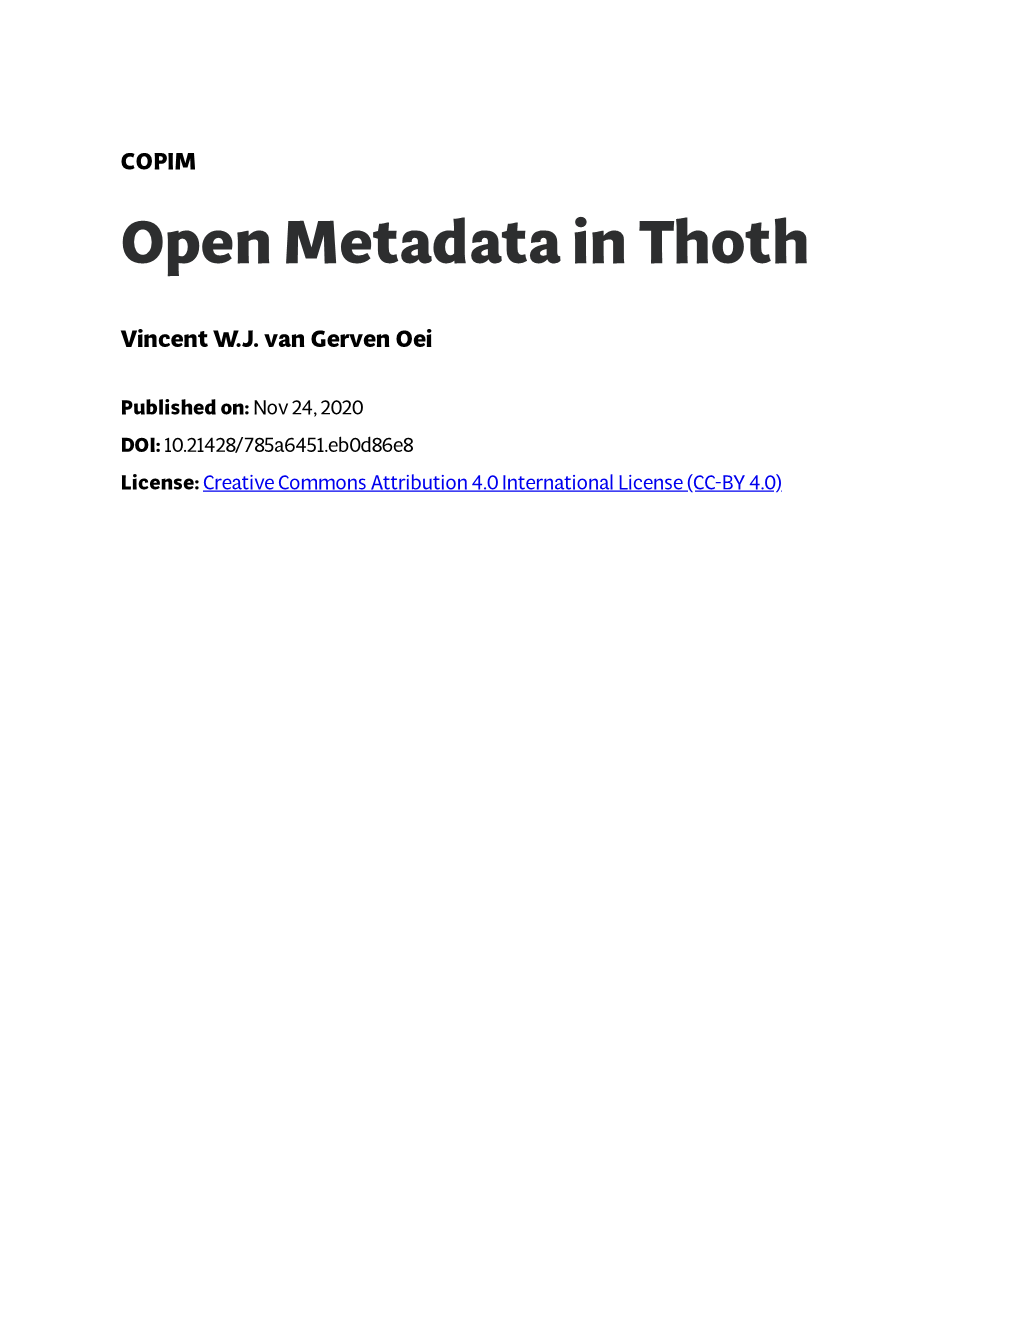 Open Metadata in Thoth